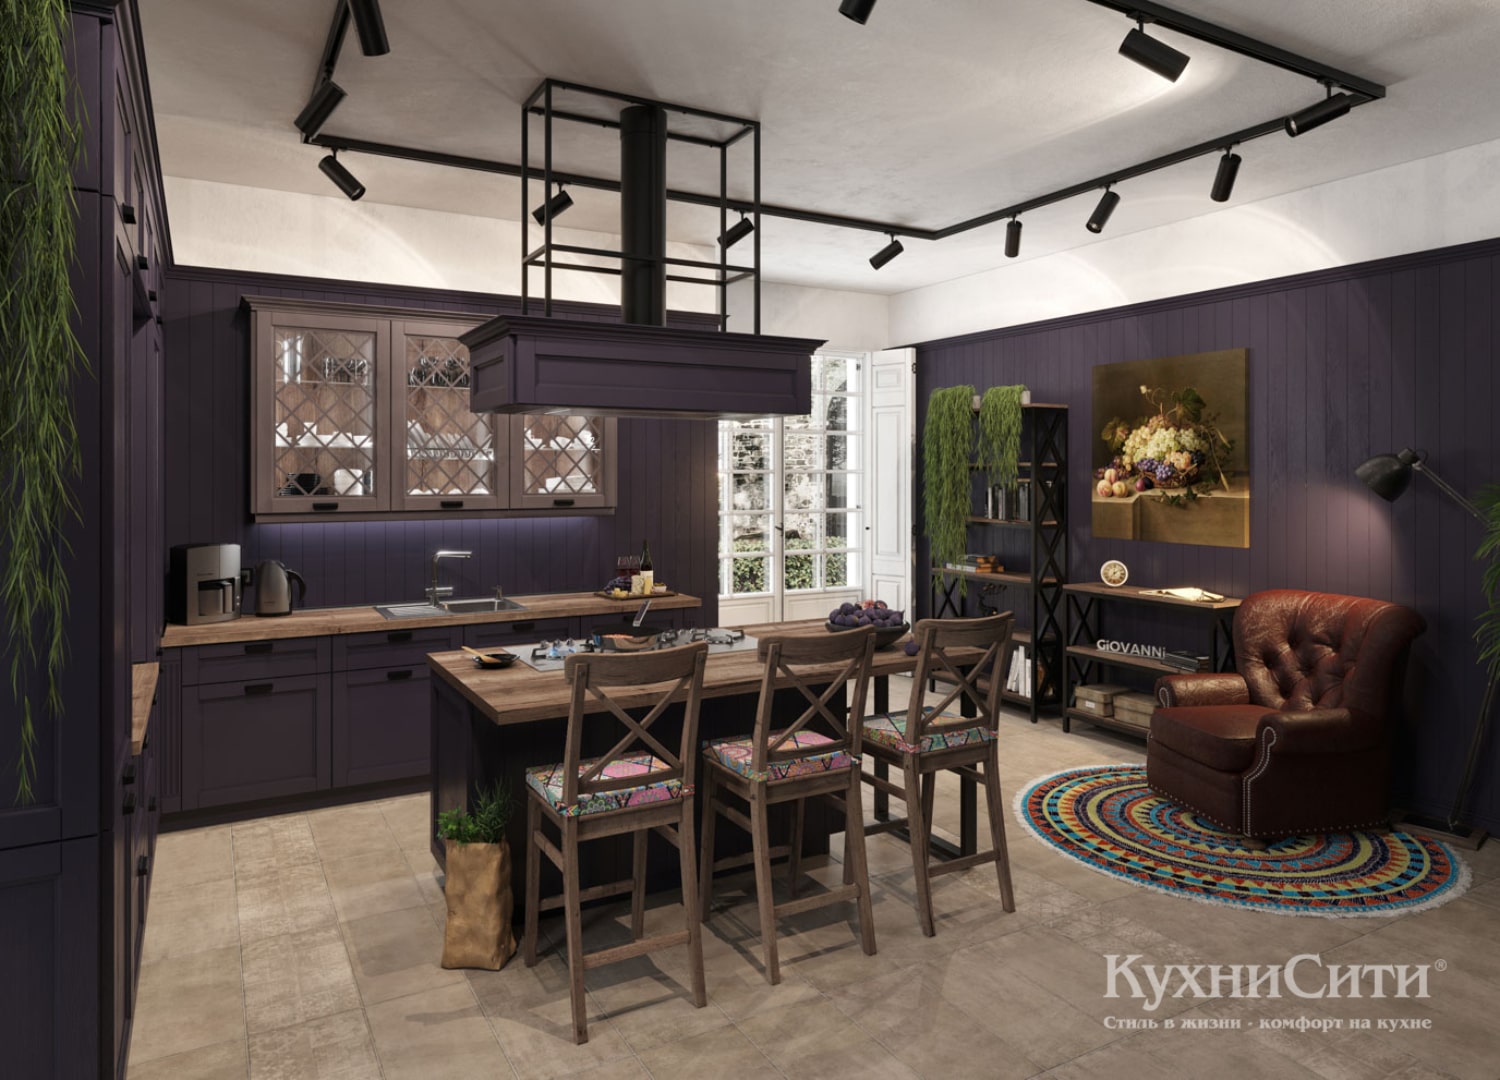 Кухня в стиле кантри фиолетовая и дерево